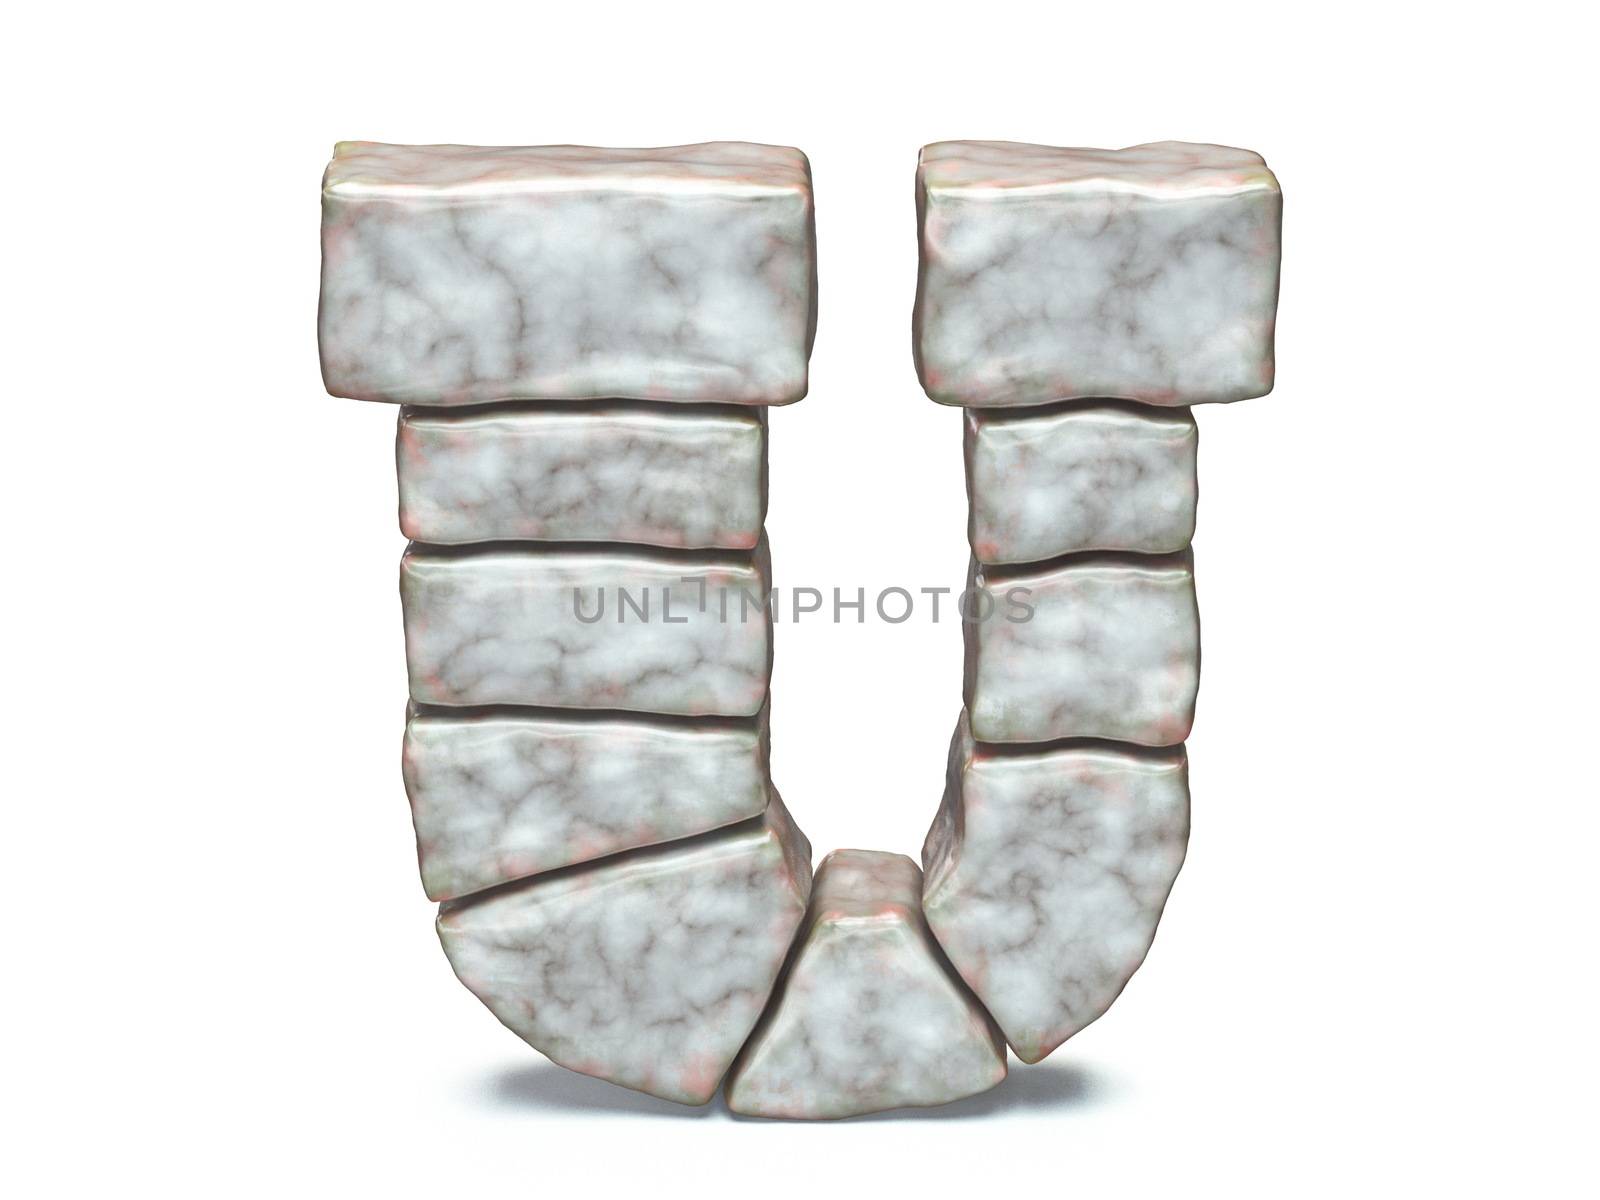 Rock masonry font letter U 3D render illustration isolated on white background